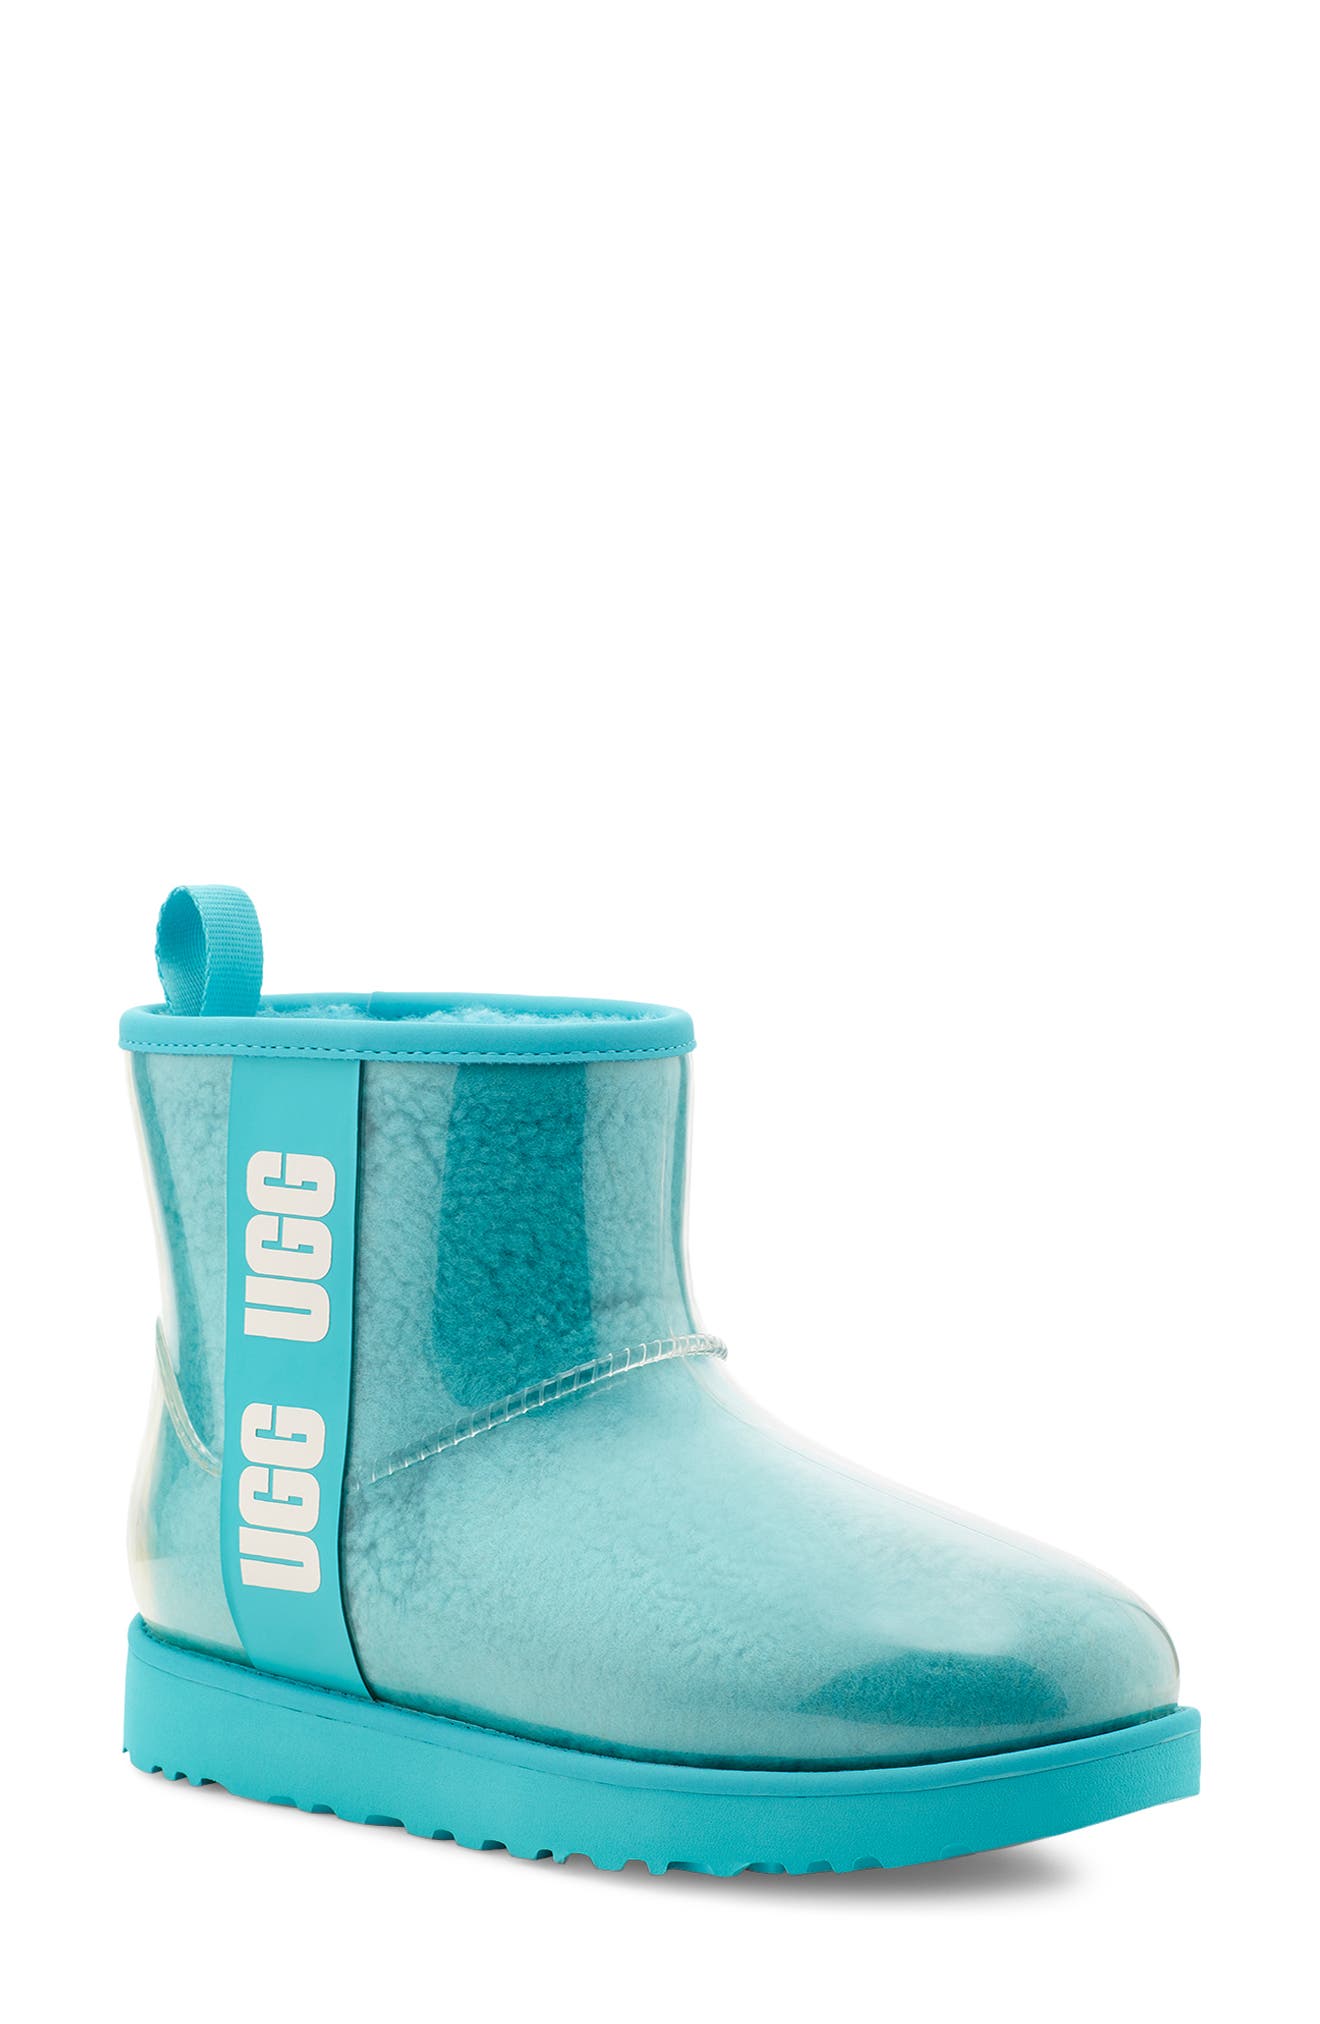 womens navy blue ugg boots